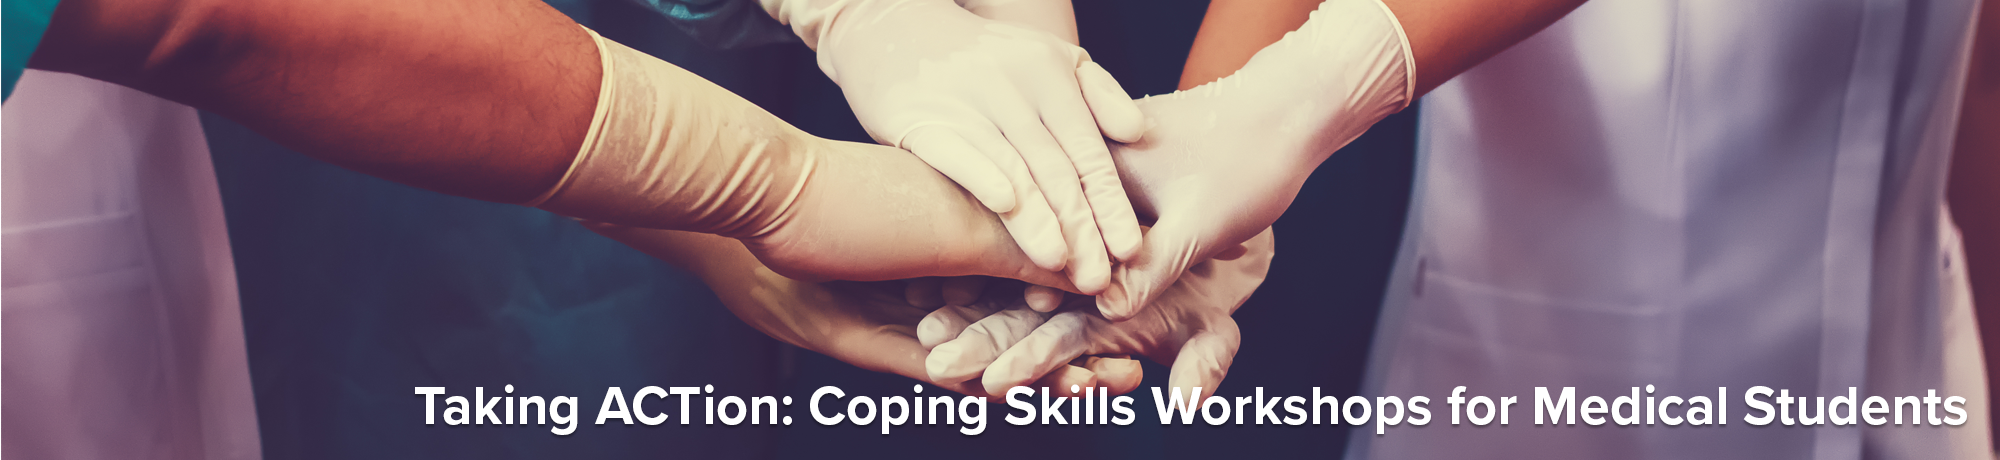 Taking ACTion: Coping Skills Workshops for Medical Students Group Banner